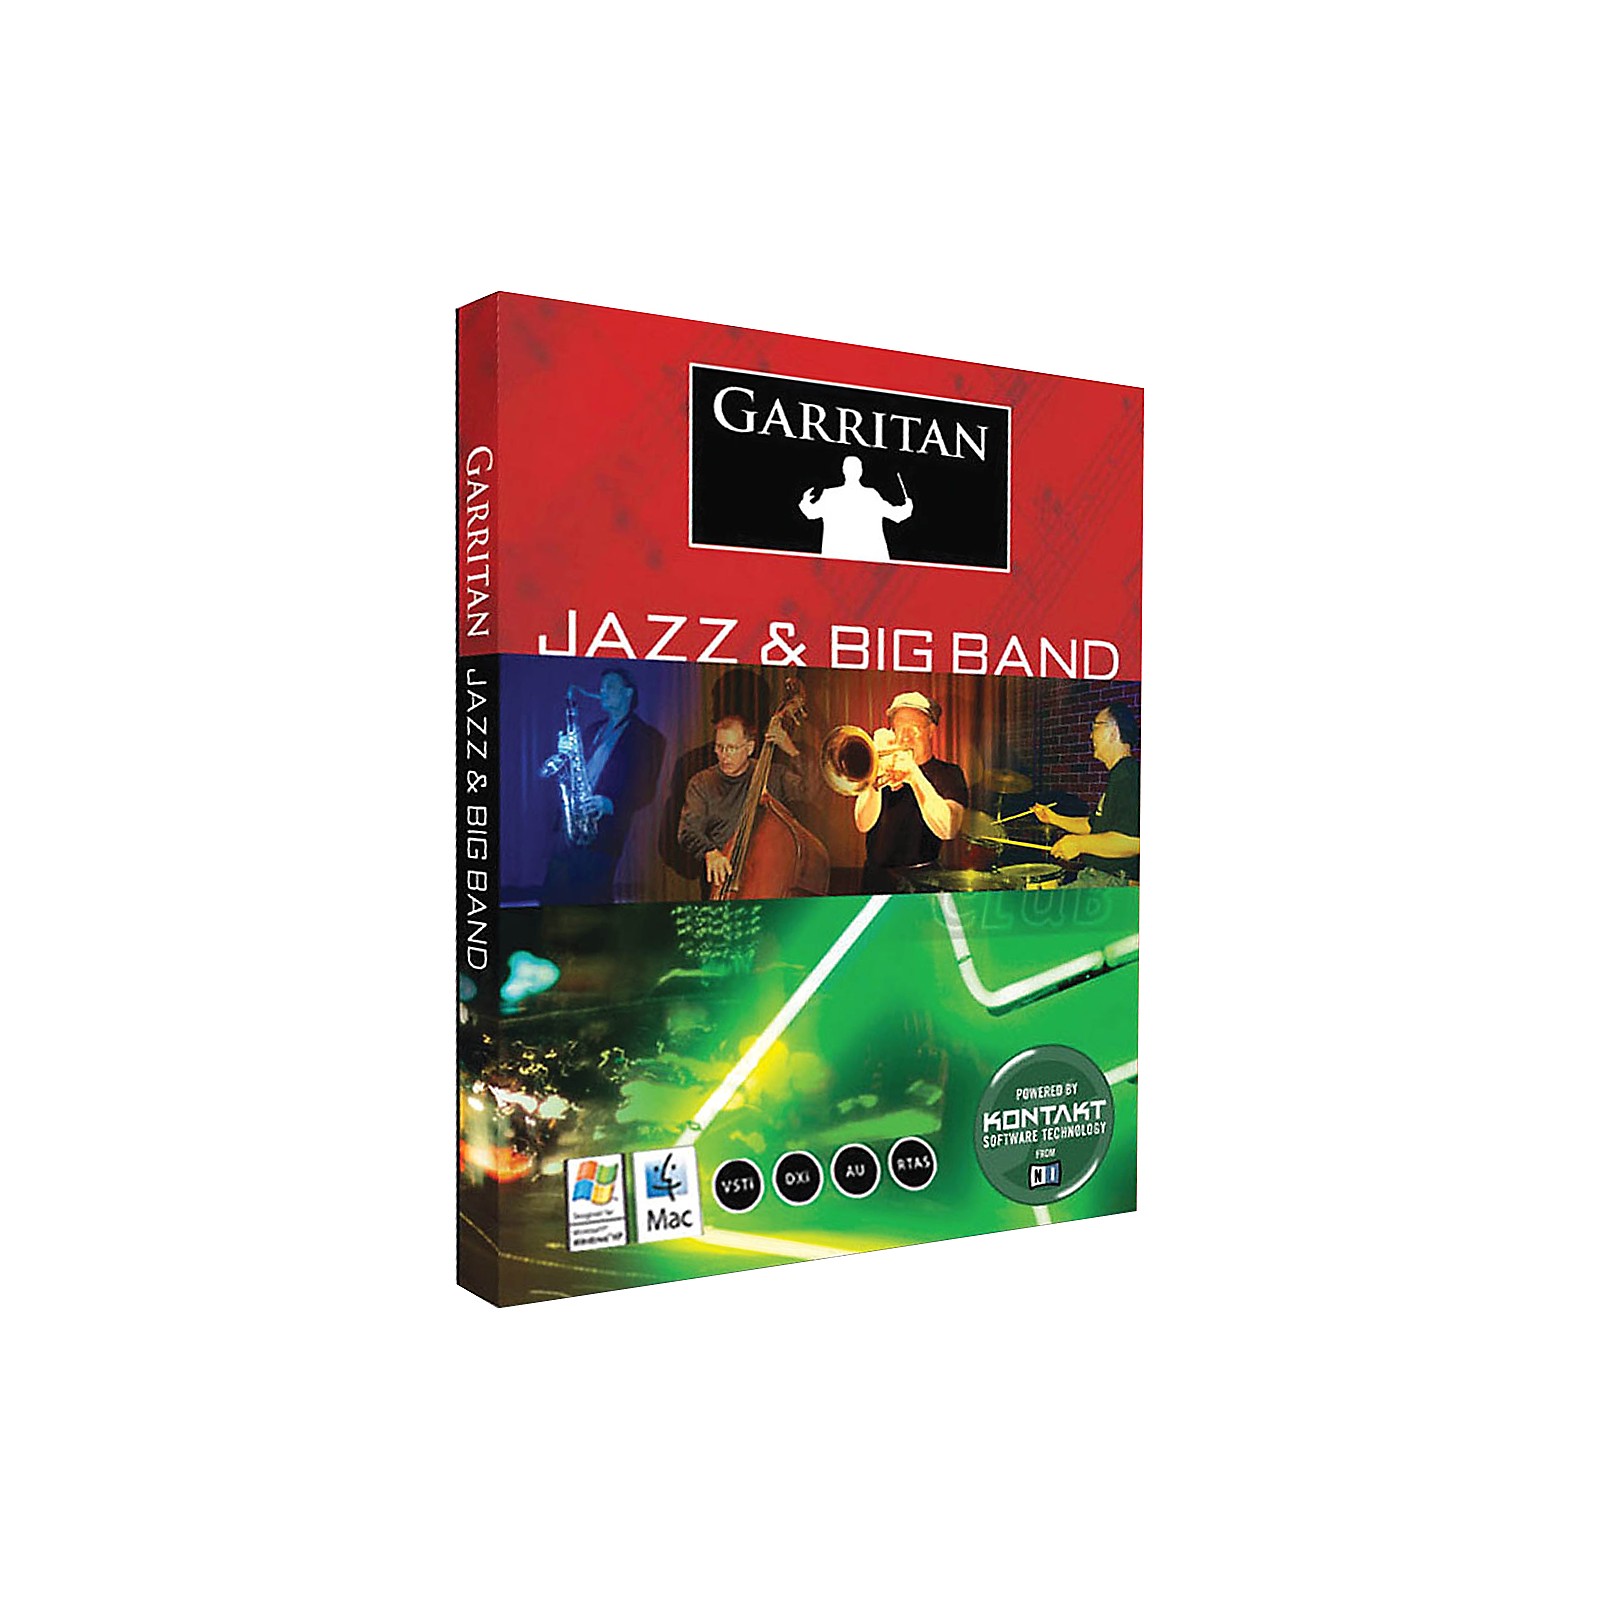 Garritan Jazz and Big Band 3 Garritan Jazz and Big Band 3 reviews